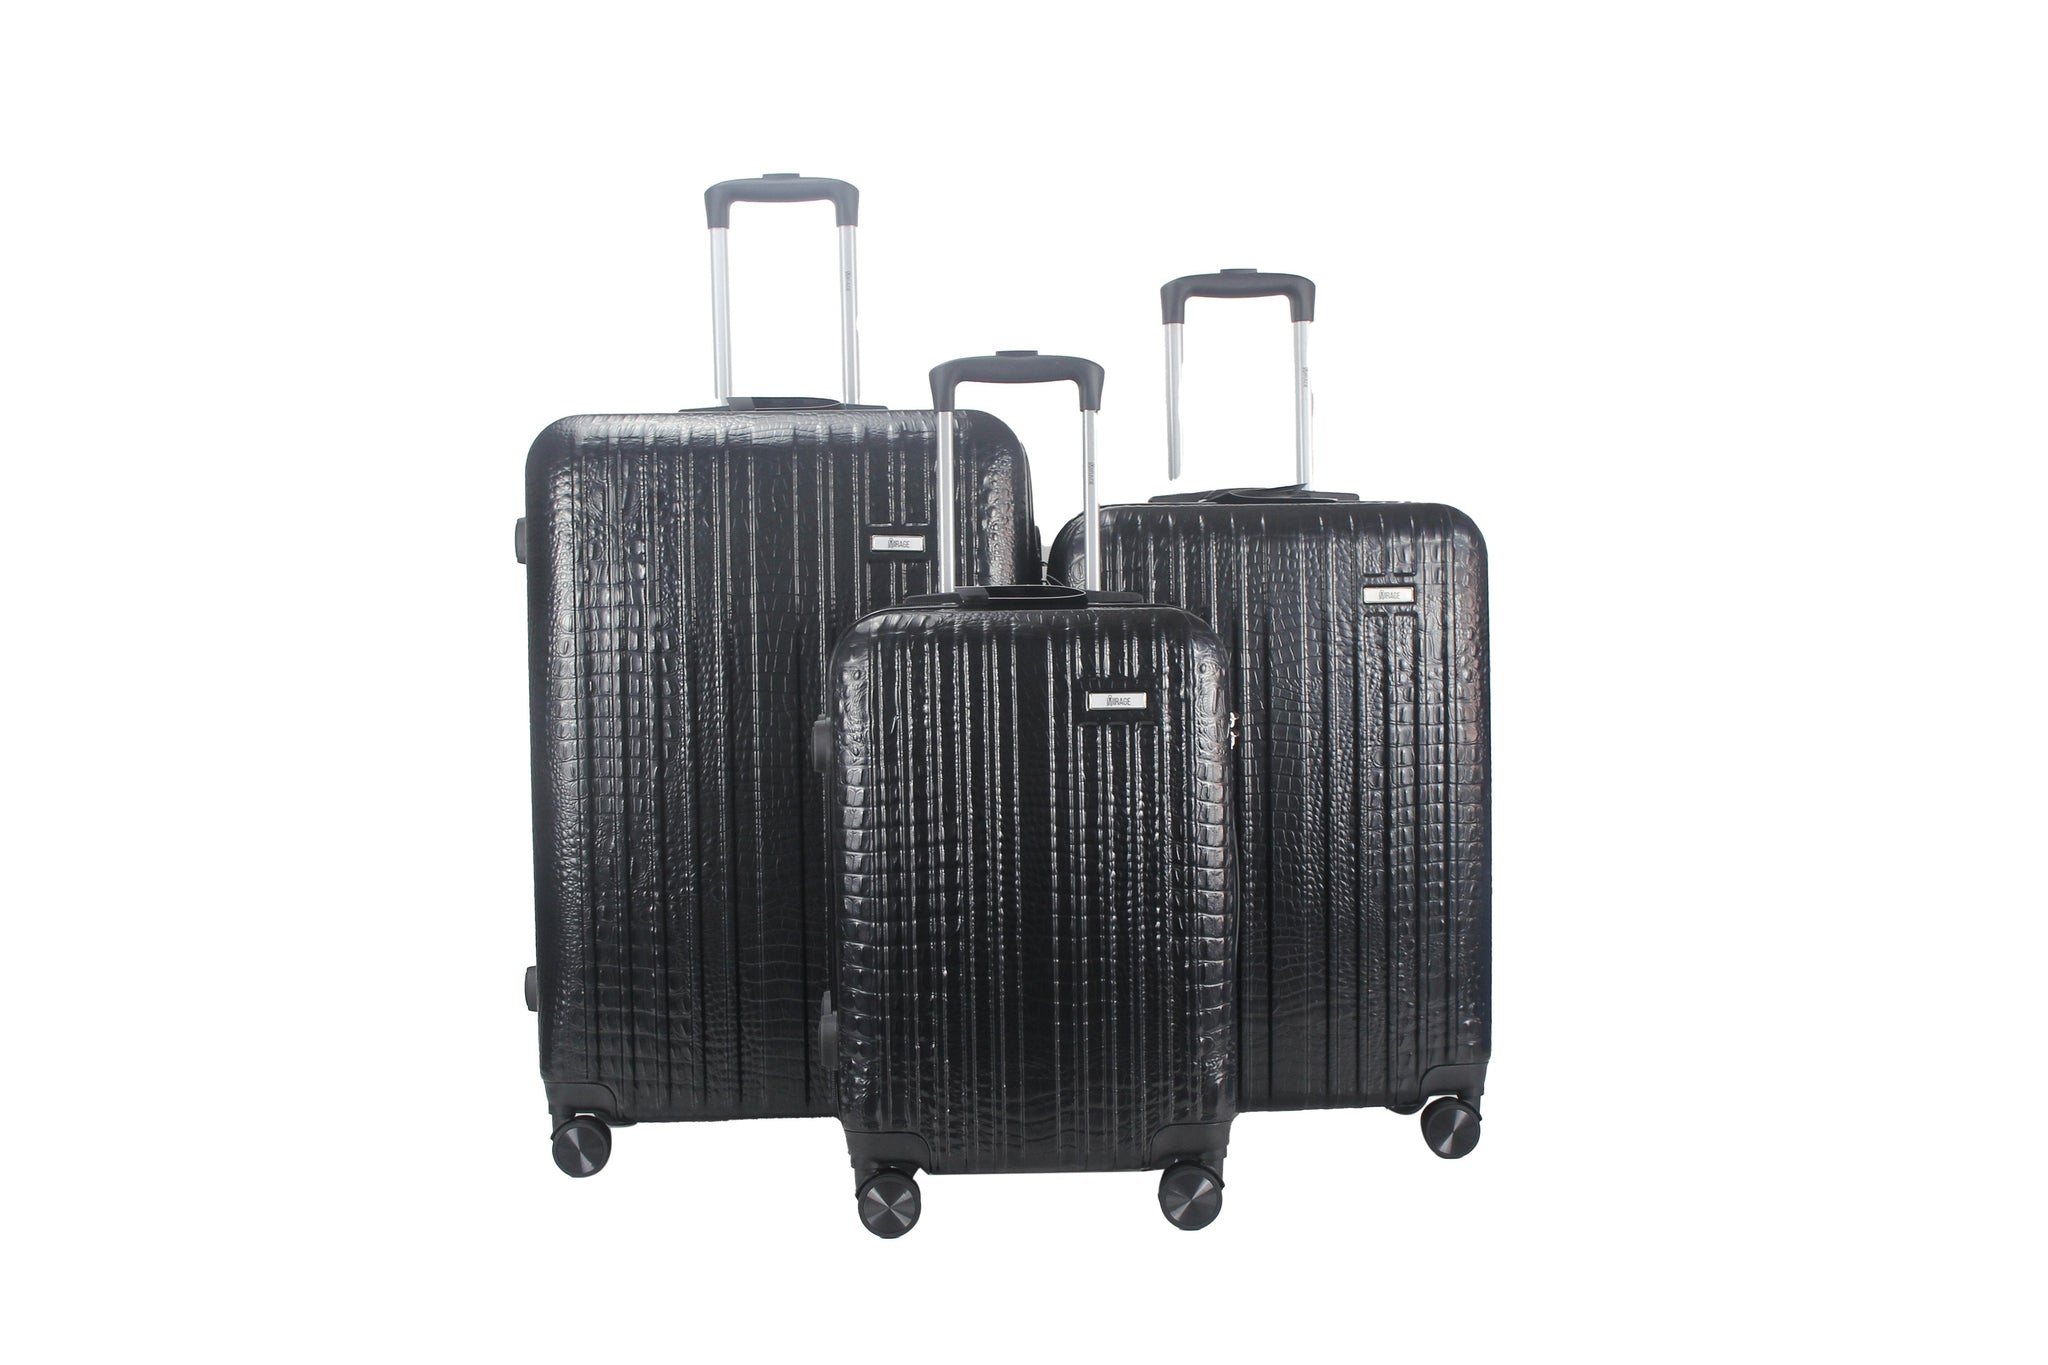 Mirage Danae 3 Piece Hardside Spinner Luggage Set